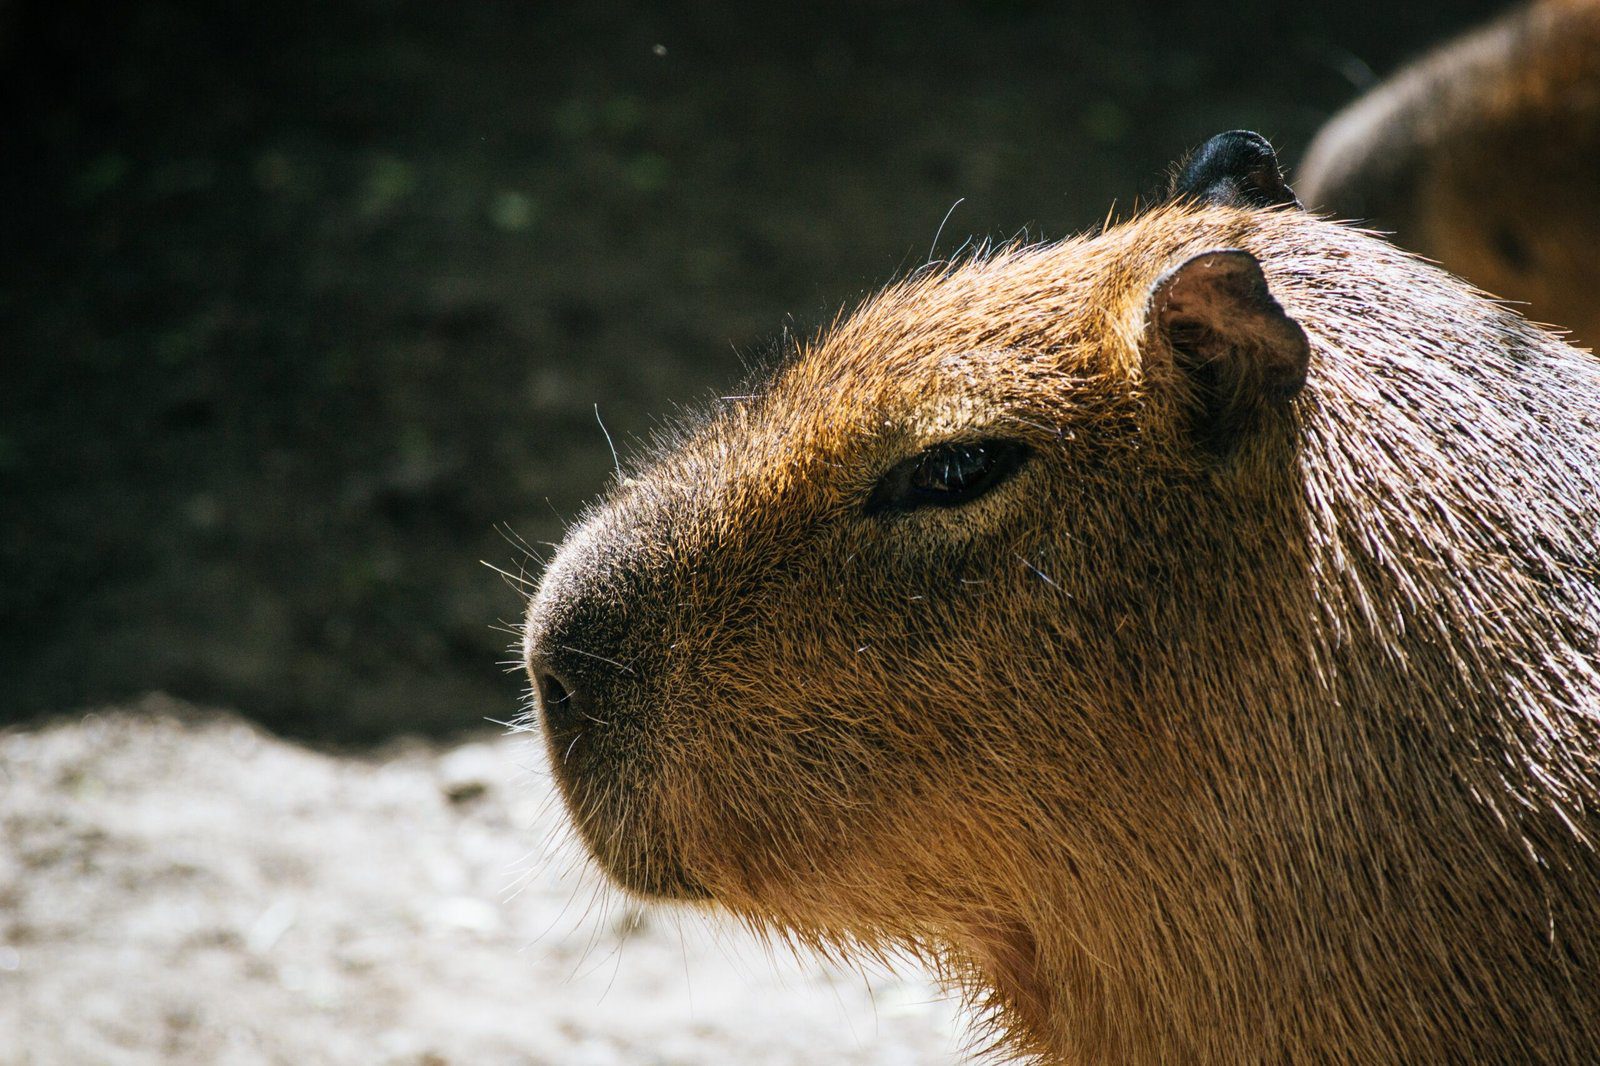 A Detailed Drawing of a Capybara